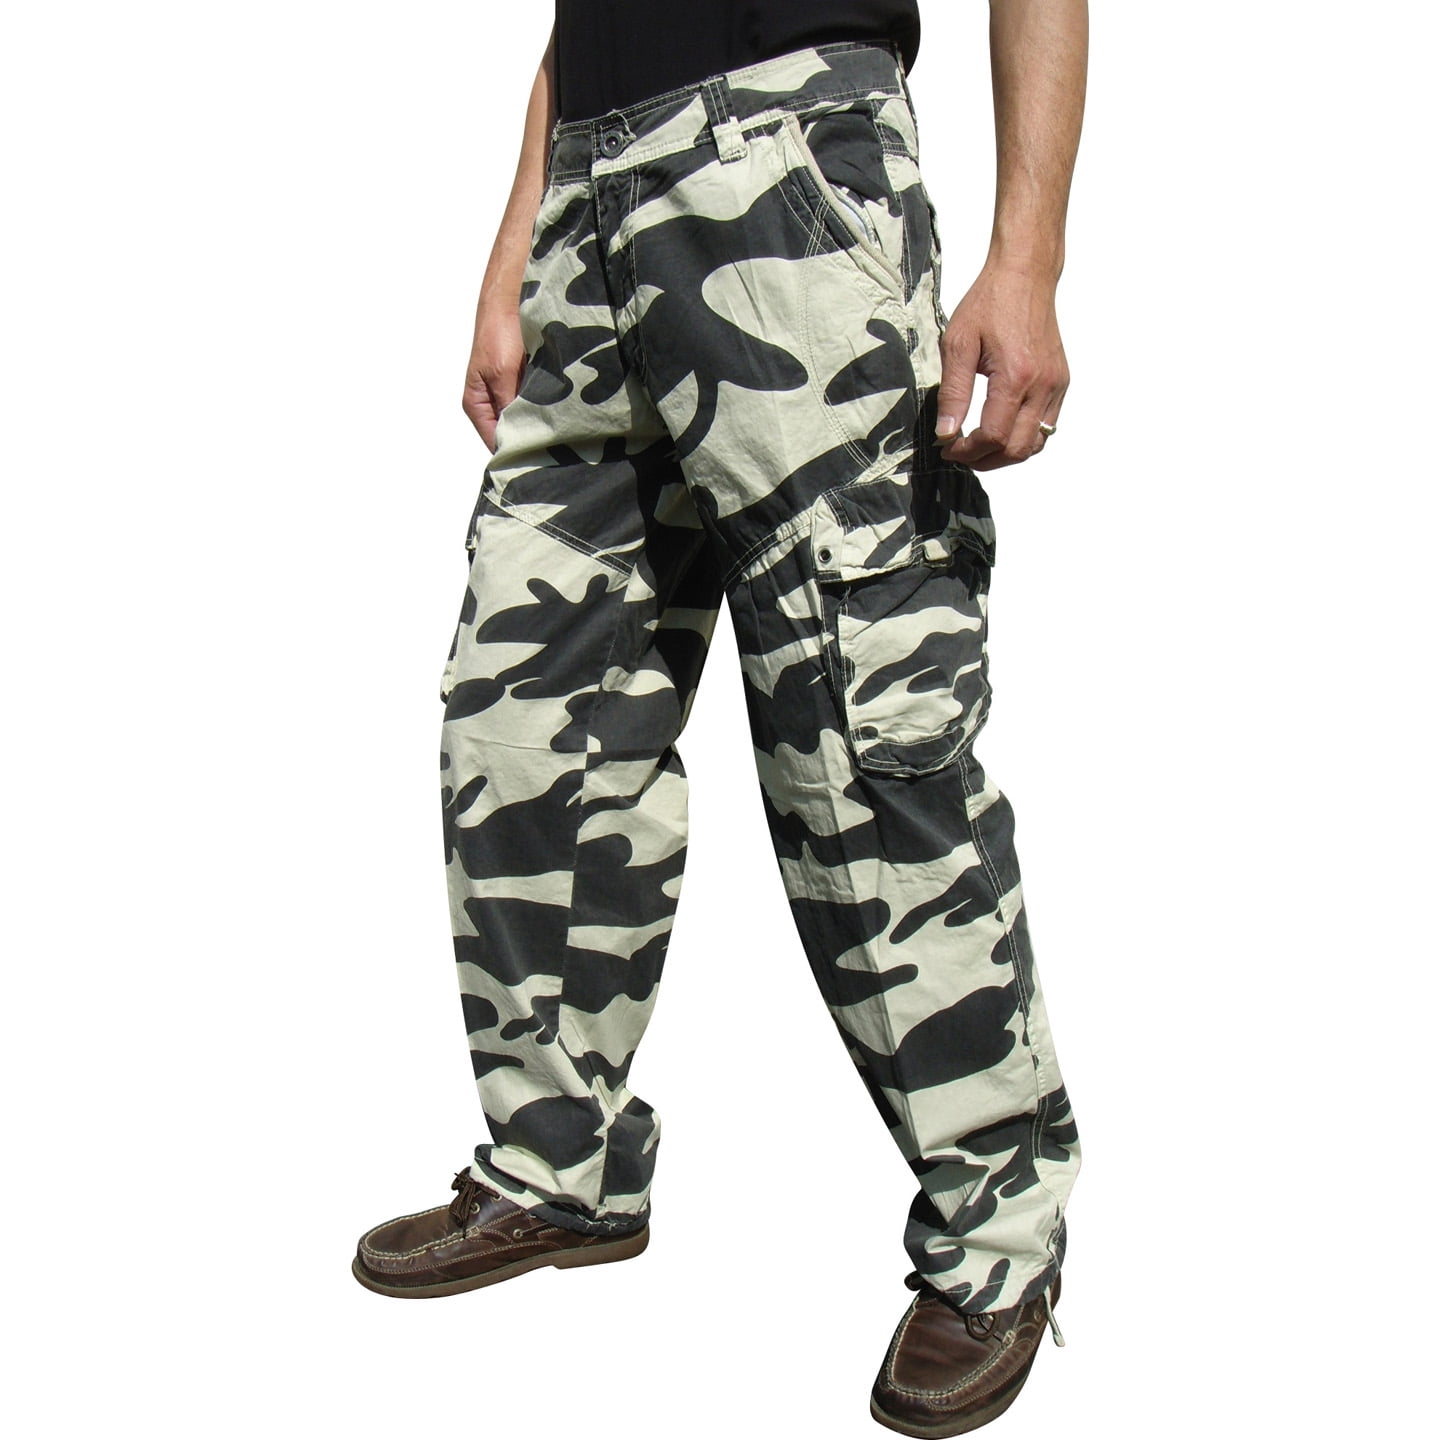 Mens Military-Style Camoflage Cargo Pants #27C1 34x32 Stone - Walmart.com